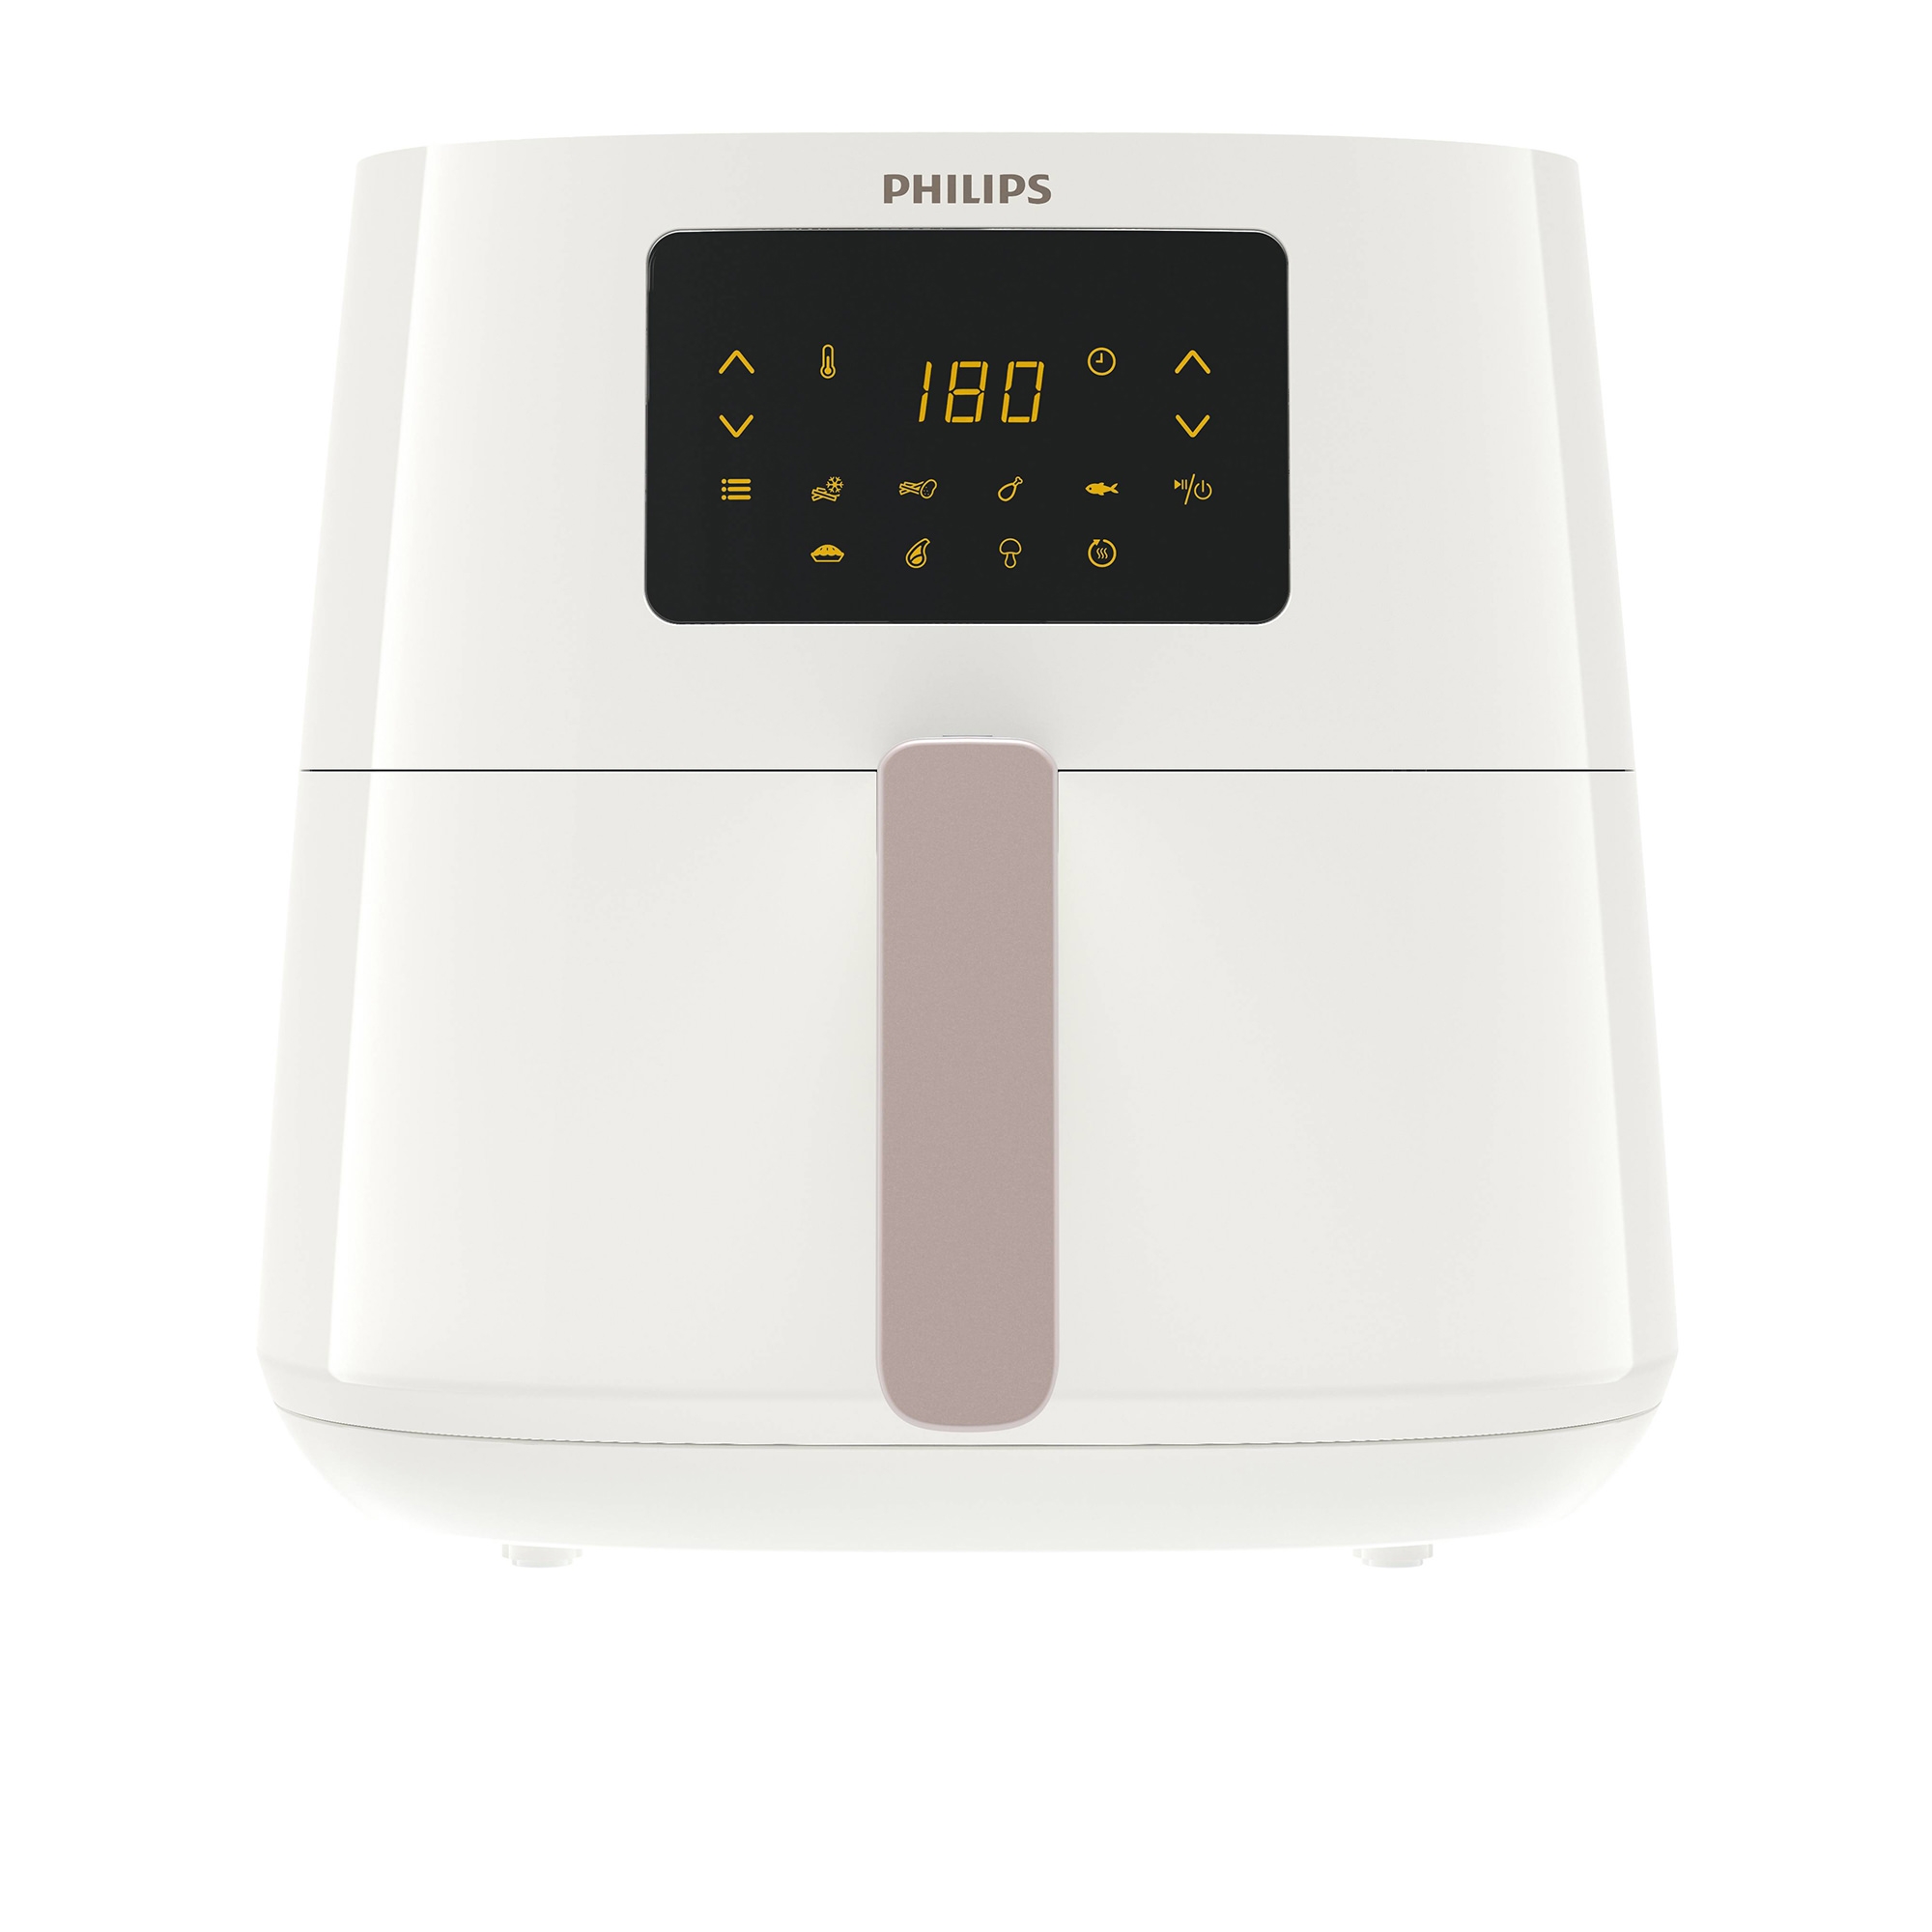 Philips HD9270/21 Essential Digital Air Fryer XL 6.2L White Image 1